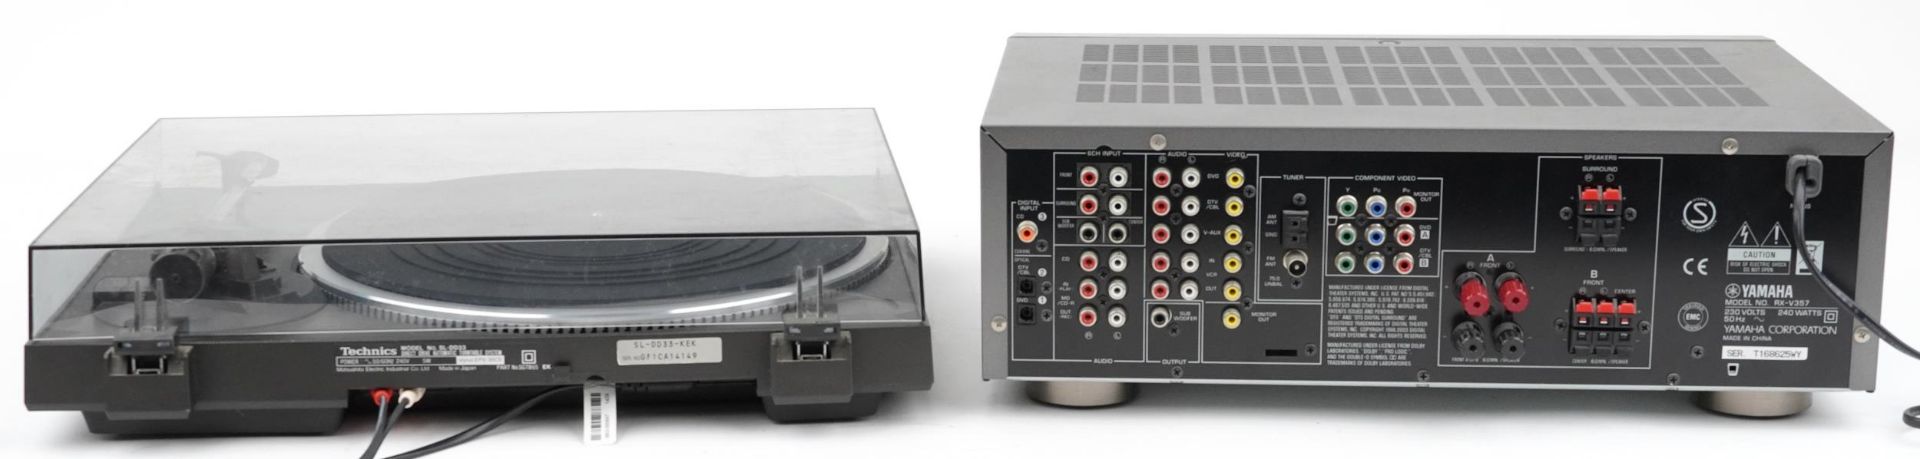 Technics automatic turntable system SL-DD33 and a Yamaha Natural Sound AV receiver RX-V357 - Bild 3 aus 5